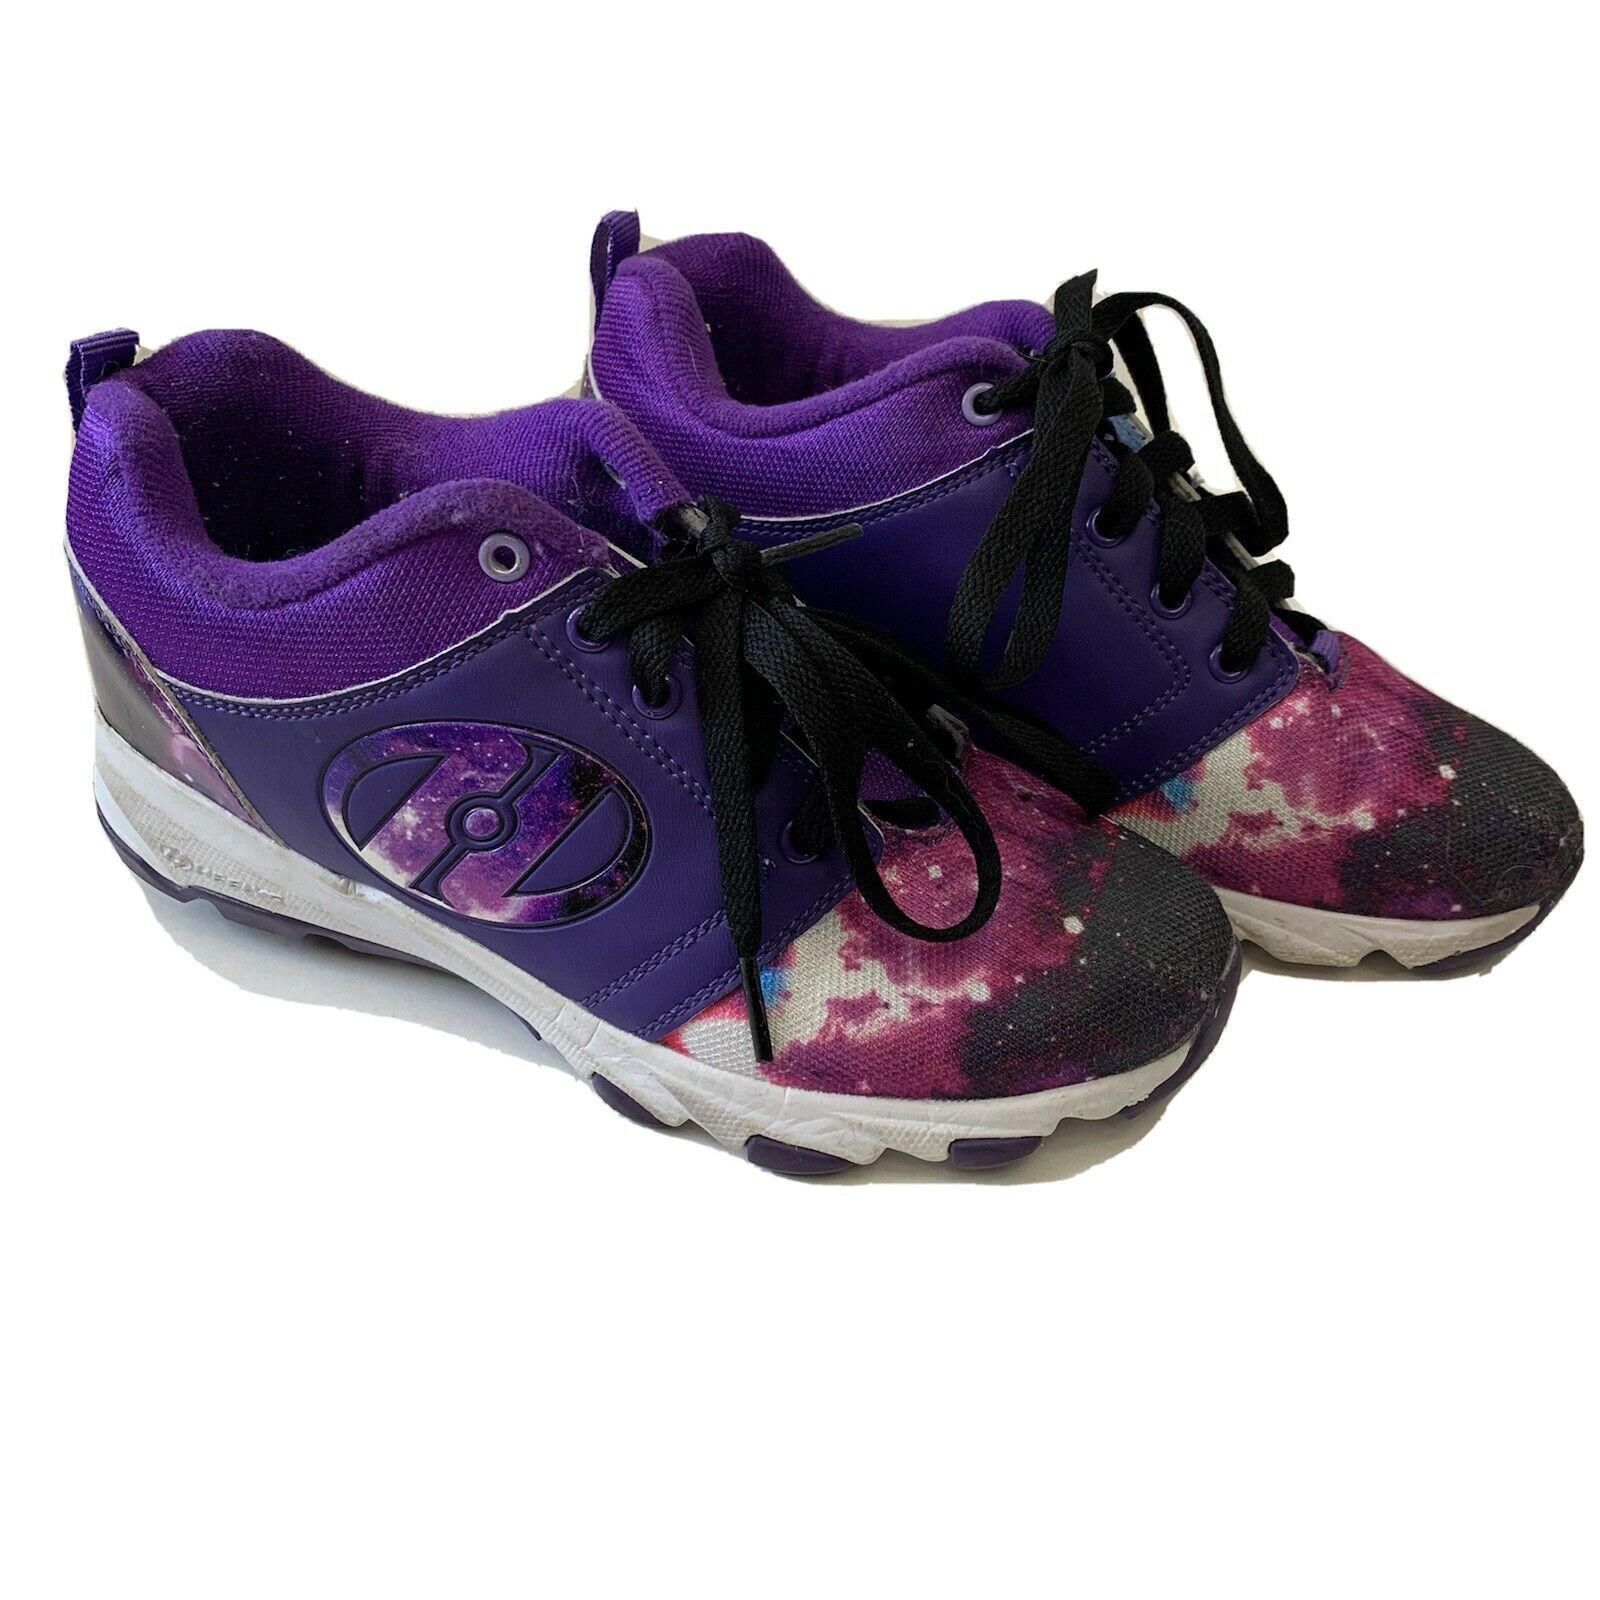 Heelys Purple Cosmic Youth Shoes US Size 4 Space Wheels For Kid Fun Summer Kickd